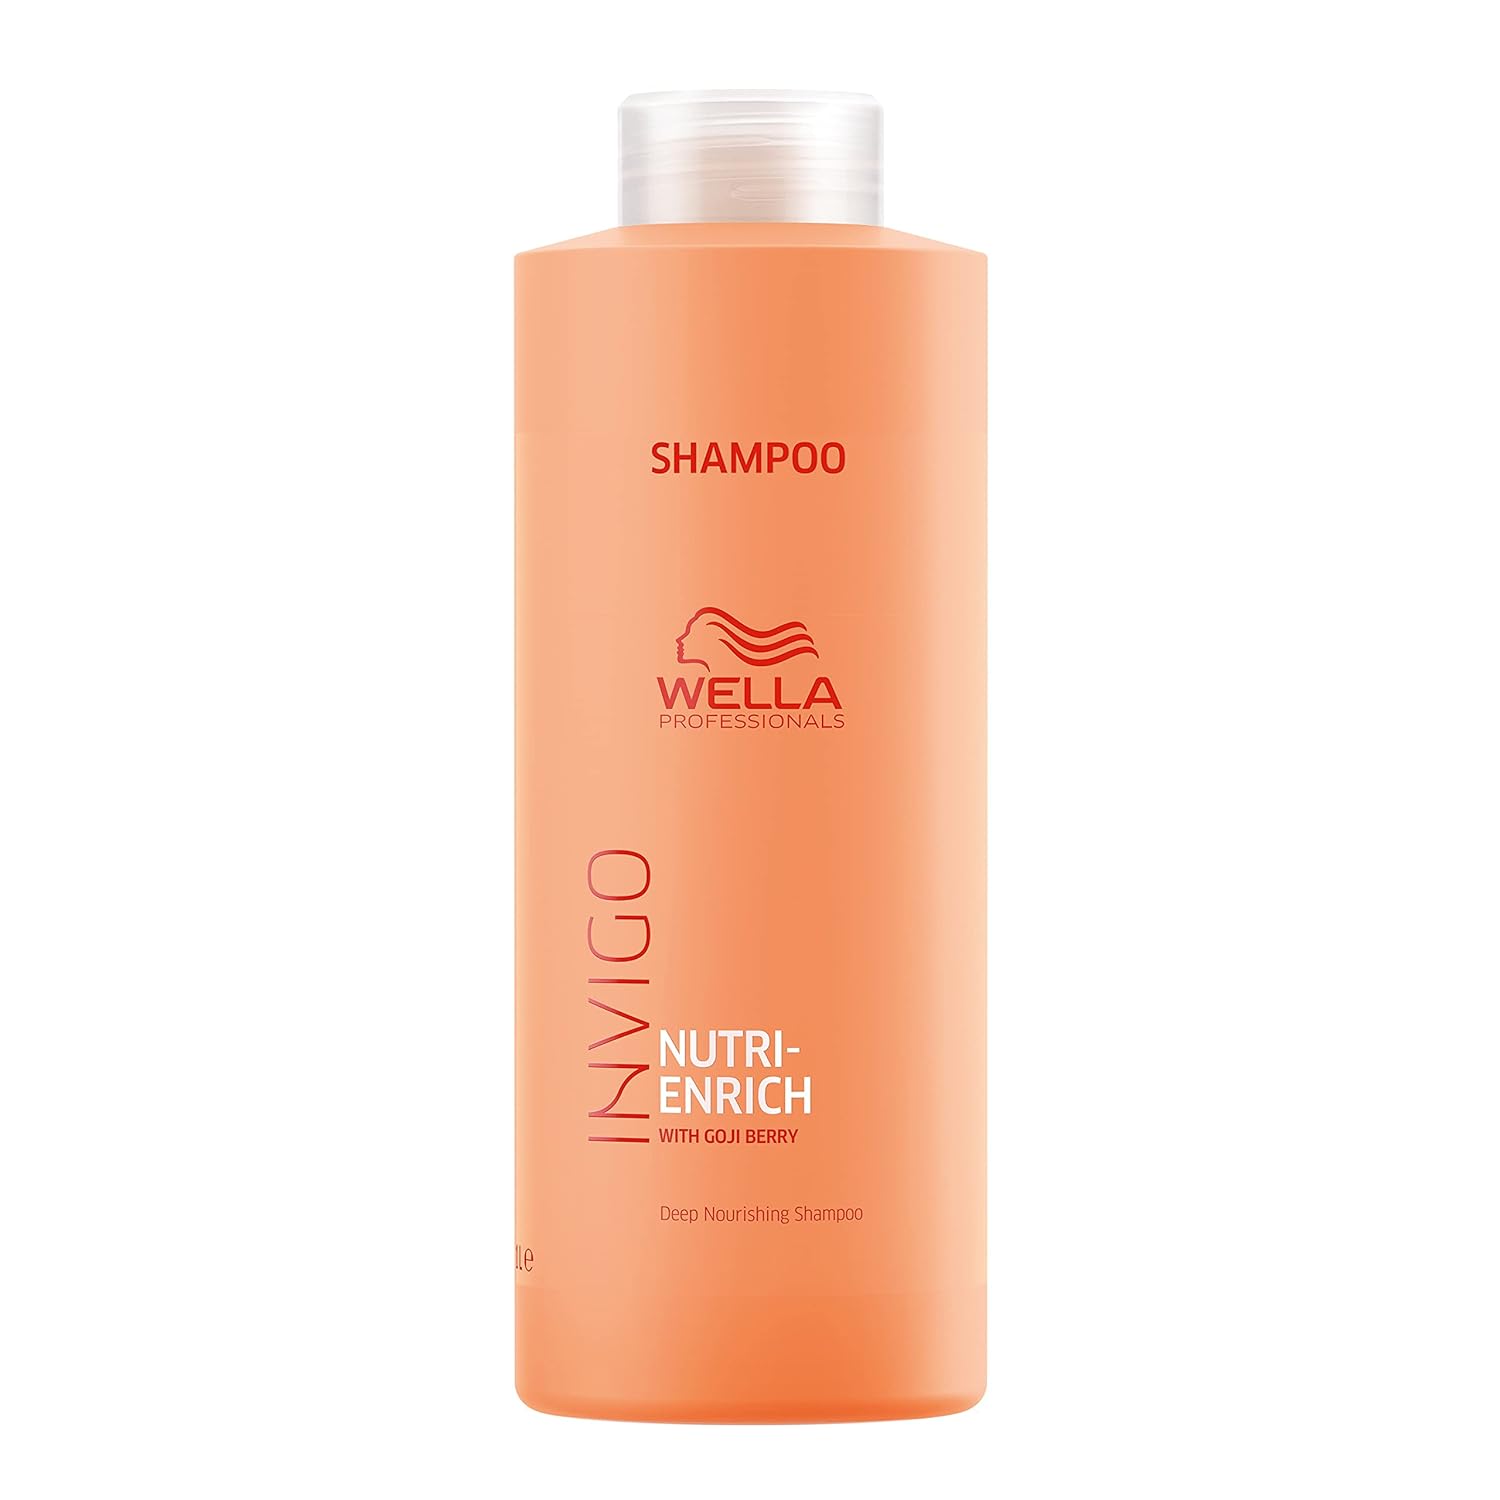 WELLA PROFESSIONALS Invigo Nutri-Enrich Shampoo, Professional Deep Nourishing Shampoo For Dry & 